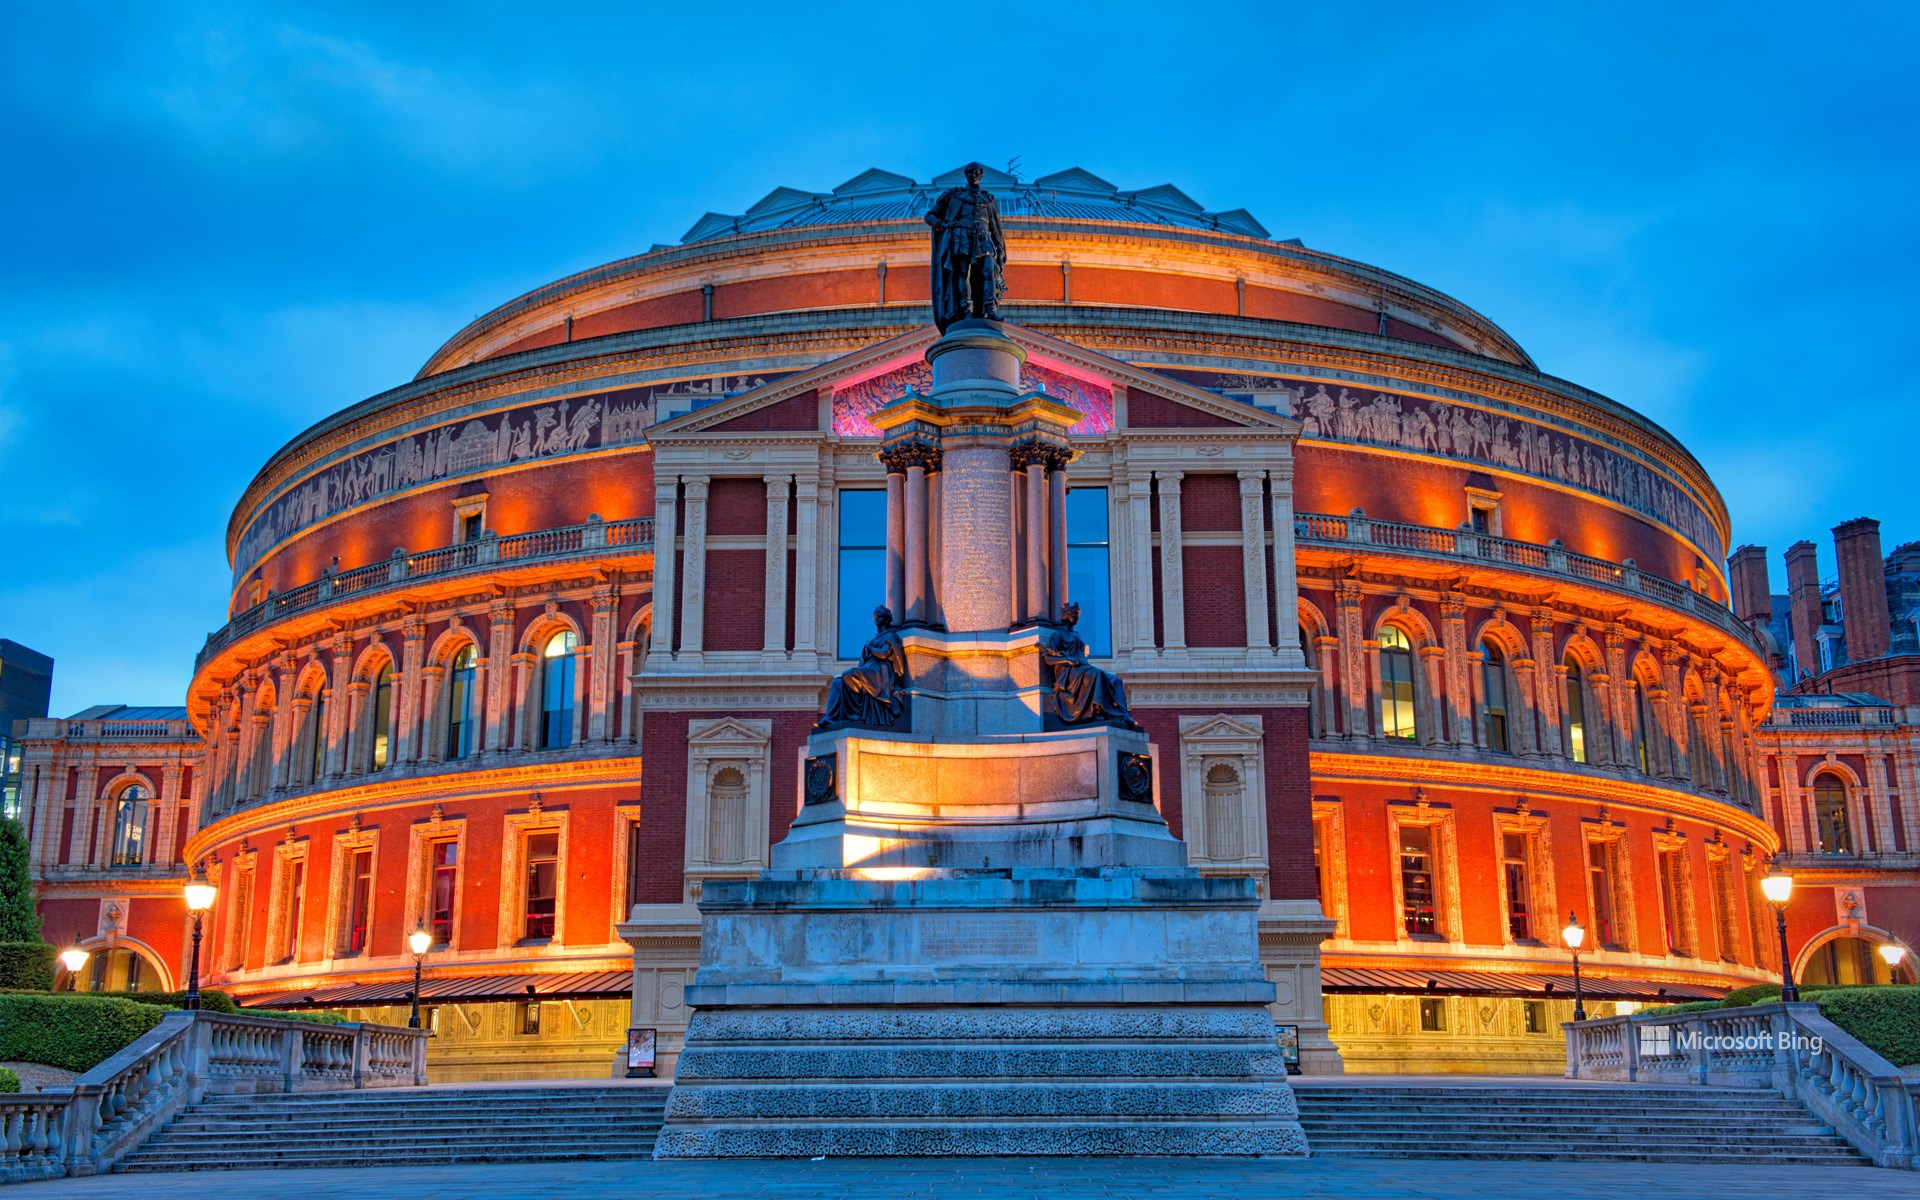 Royal Albert Hall at night, South Kensington, London.